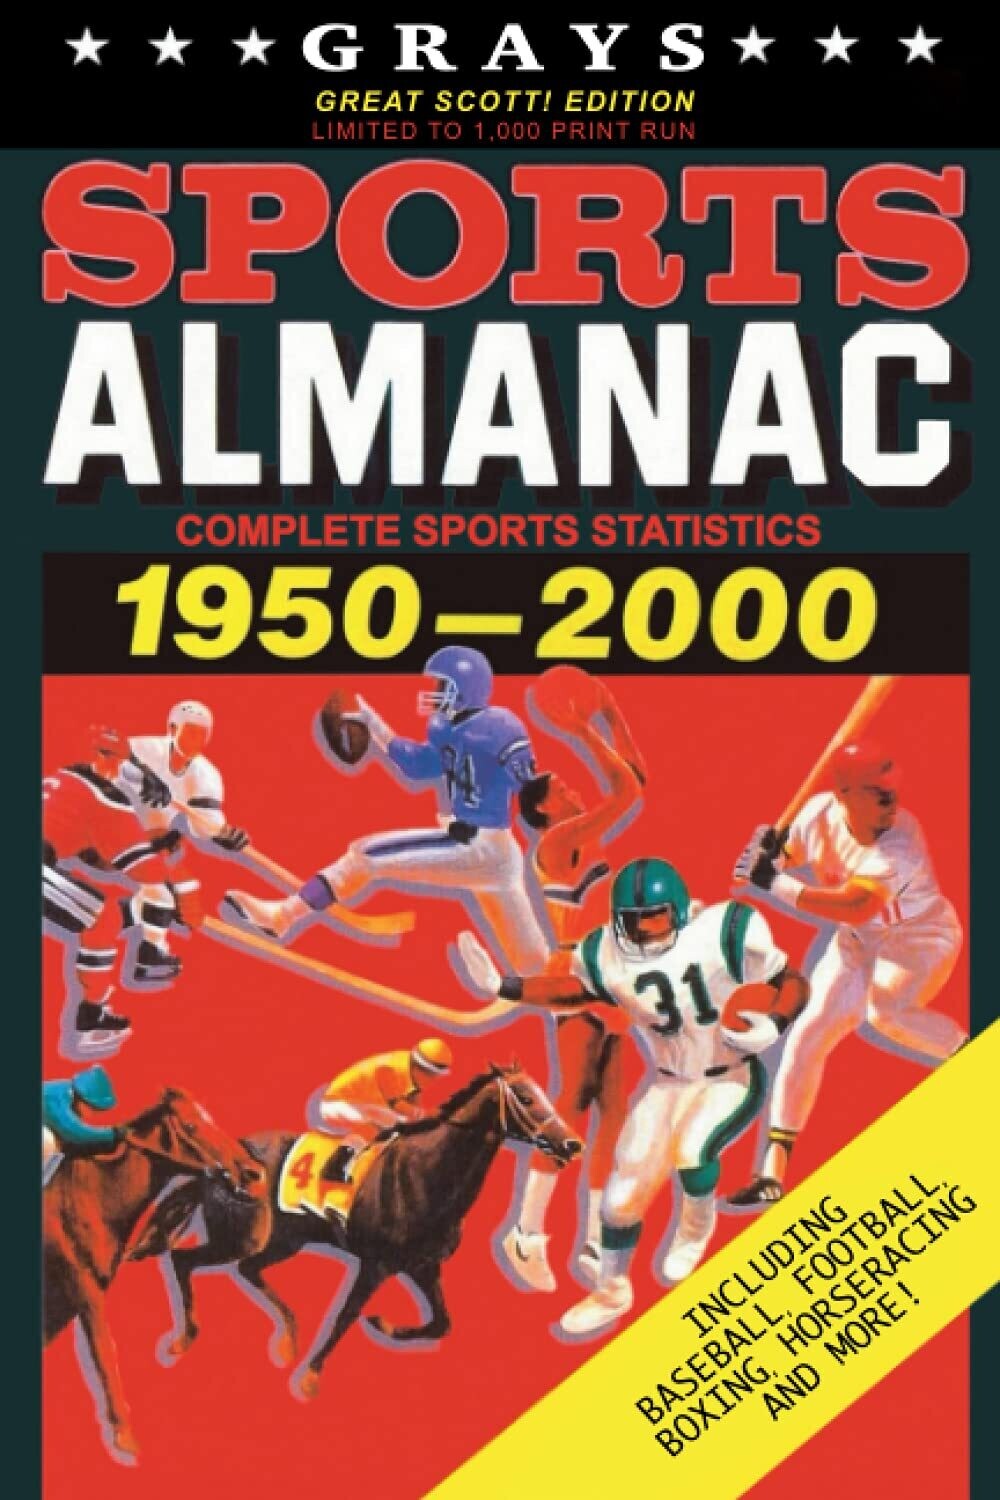 Grays Sports Almanac: Complete Sports Statistics 1950-2000 Book [GREAT SCOTT! Edition - LIMITED TO 1,000 PRINT RUN]